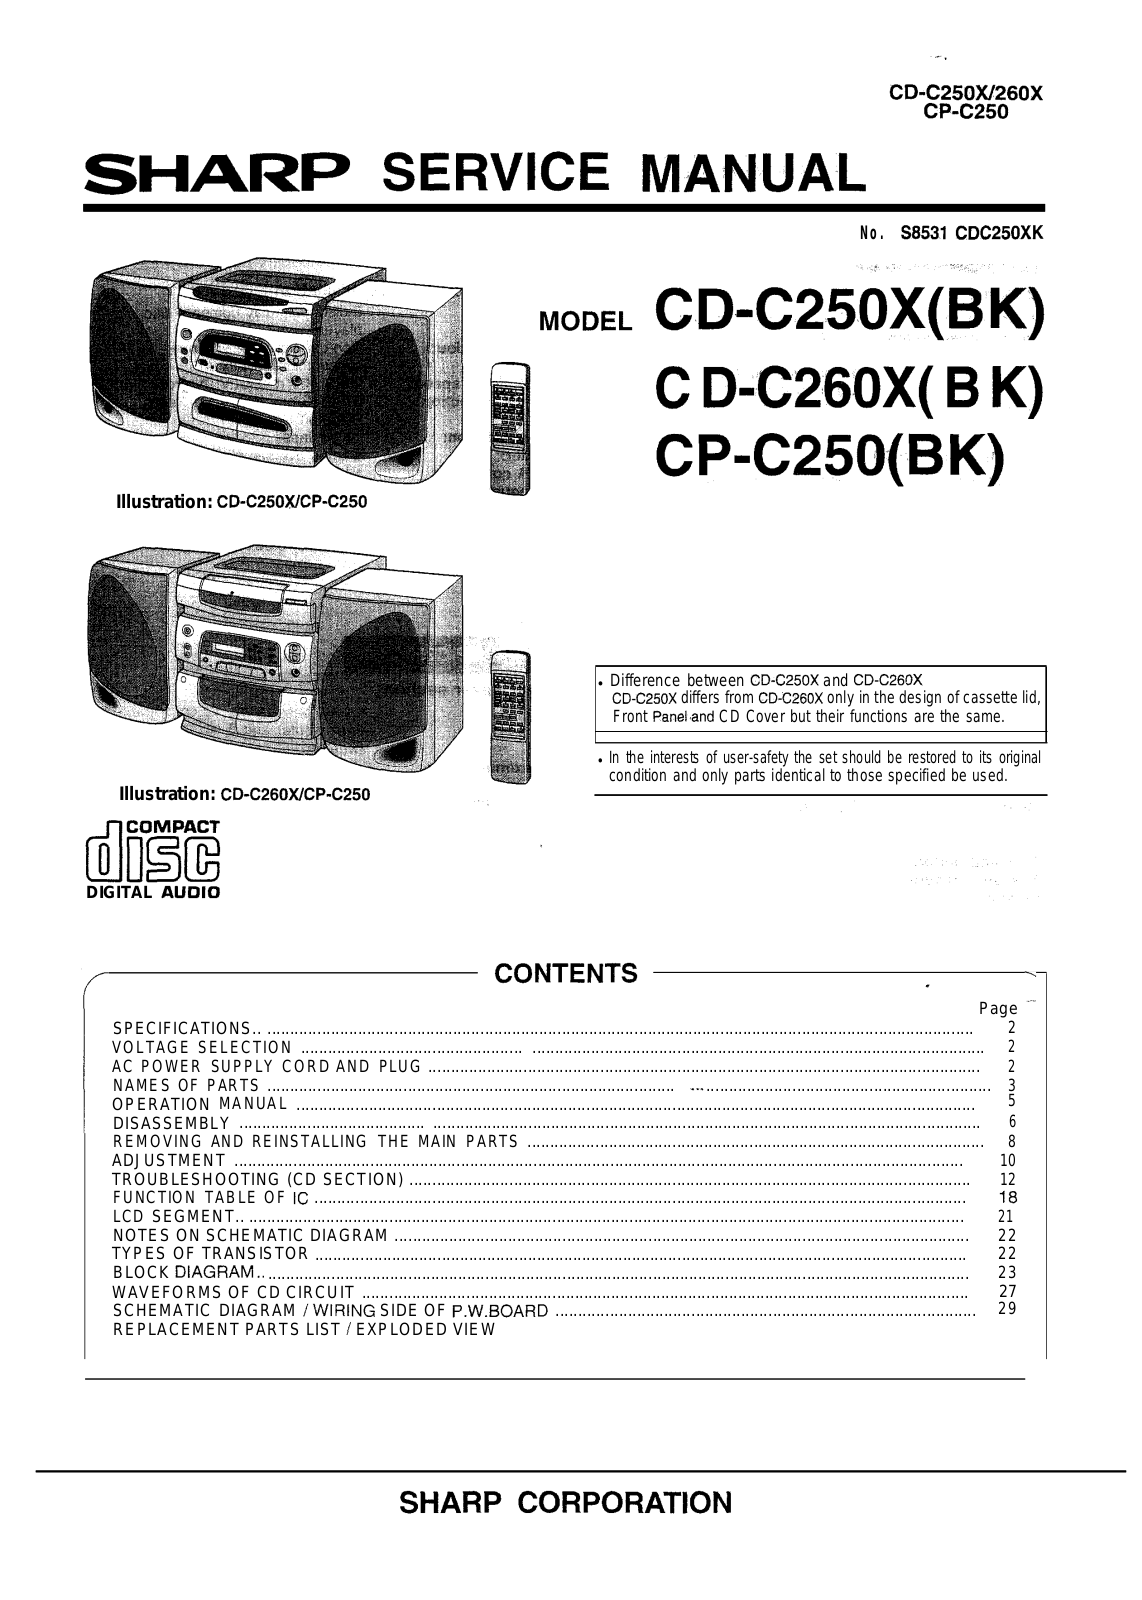 Sharp CD-C250X, CD-C260X Schematic